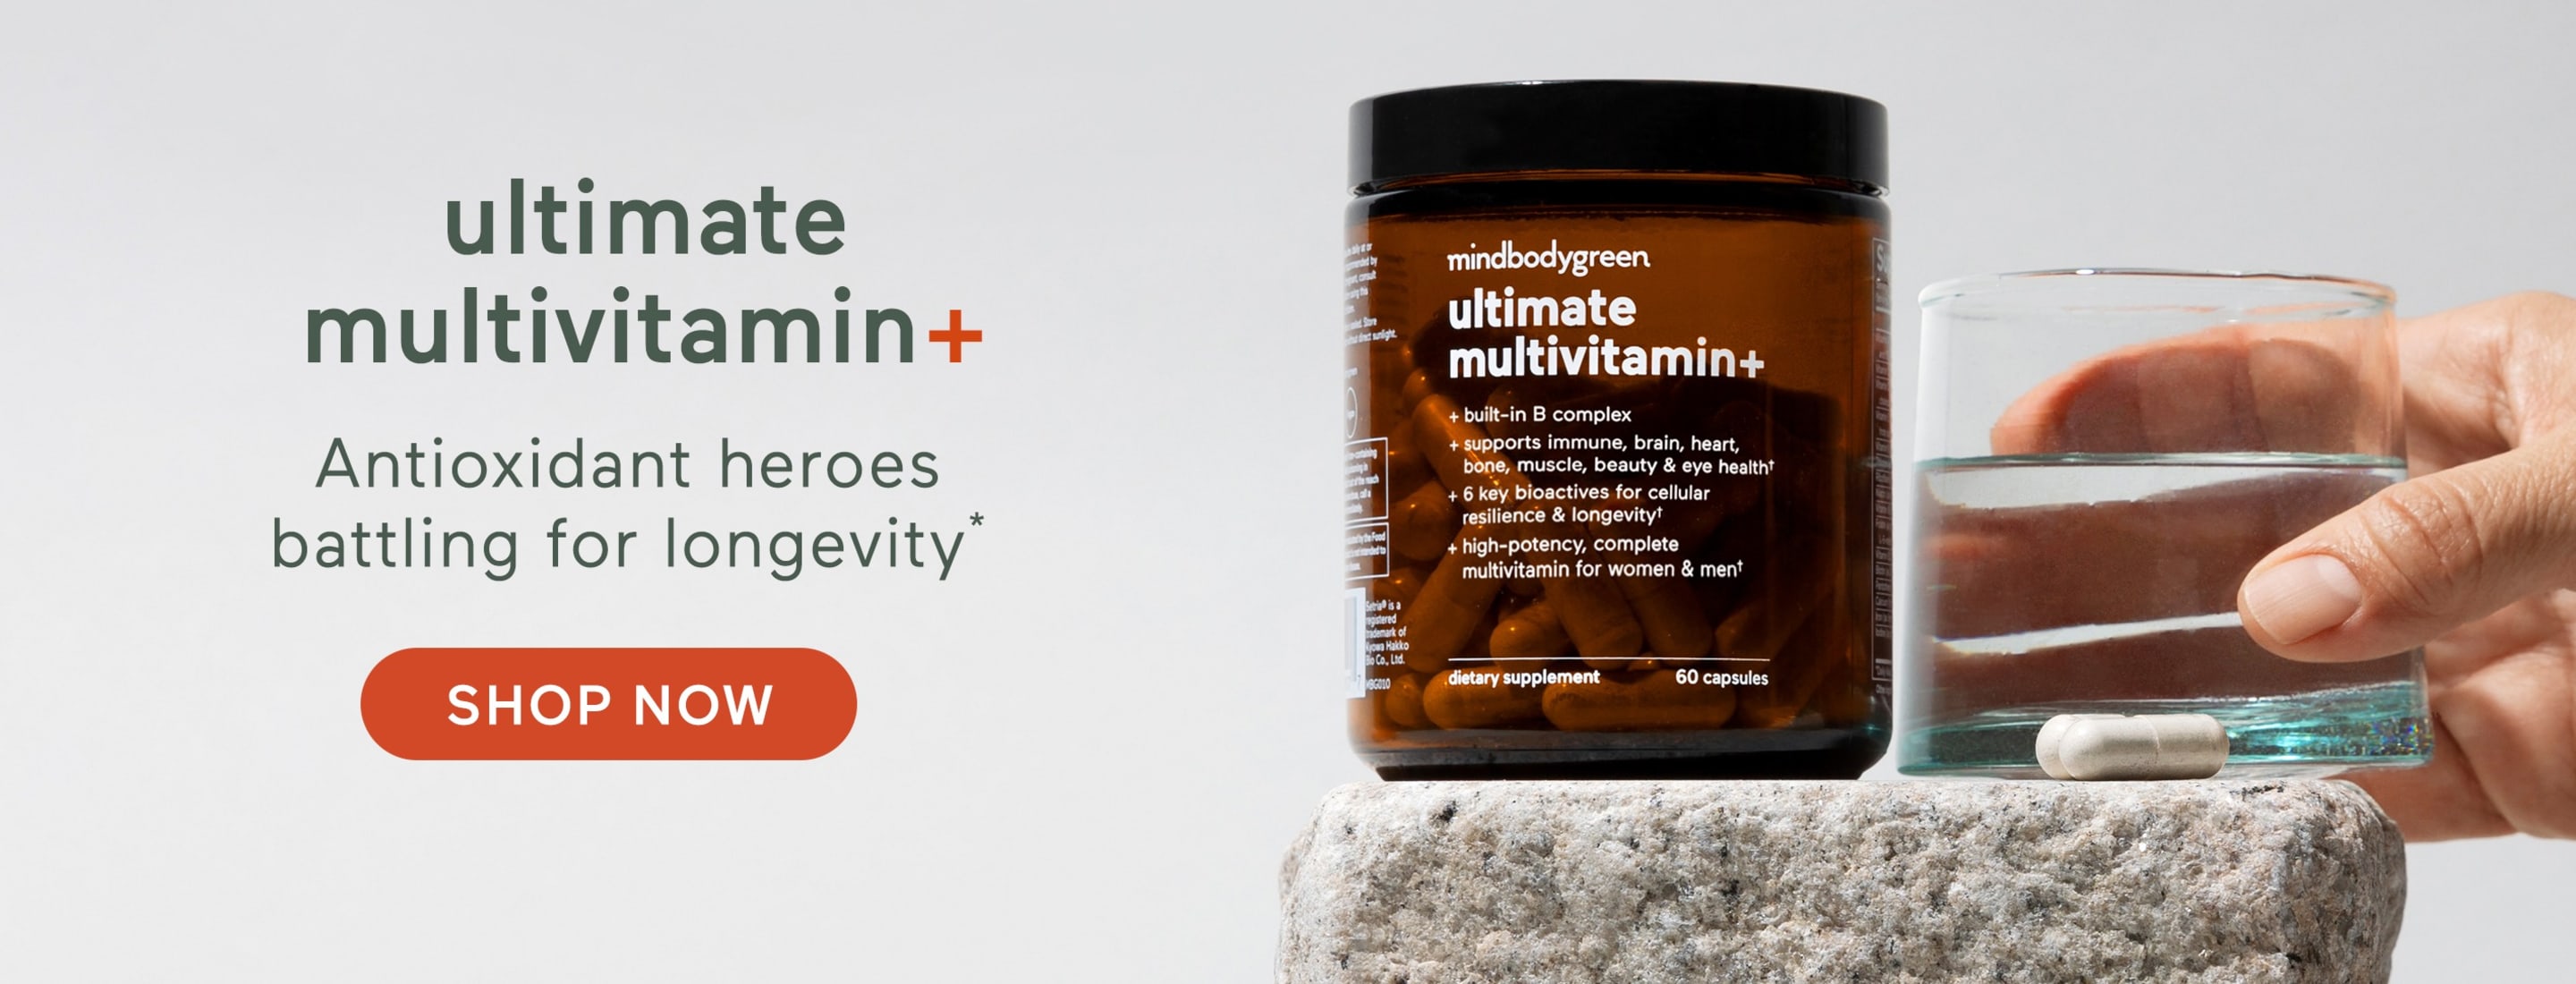 ultimate multivitamin+ Antioxidant heroes battling for longevity* SHOP NOW